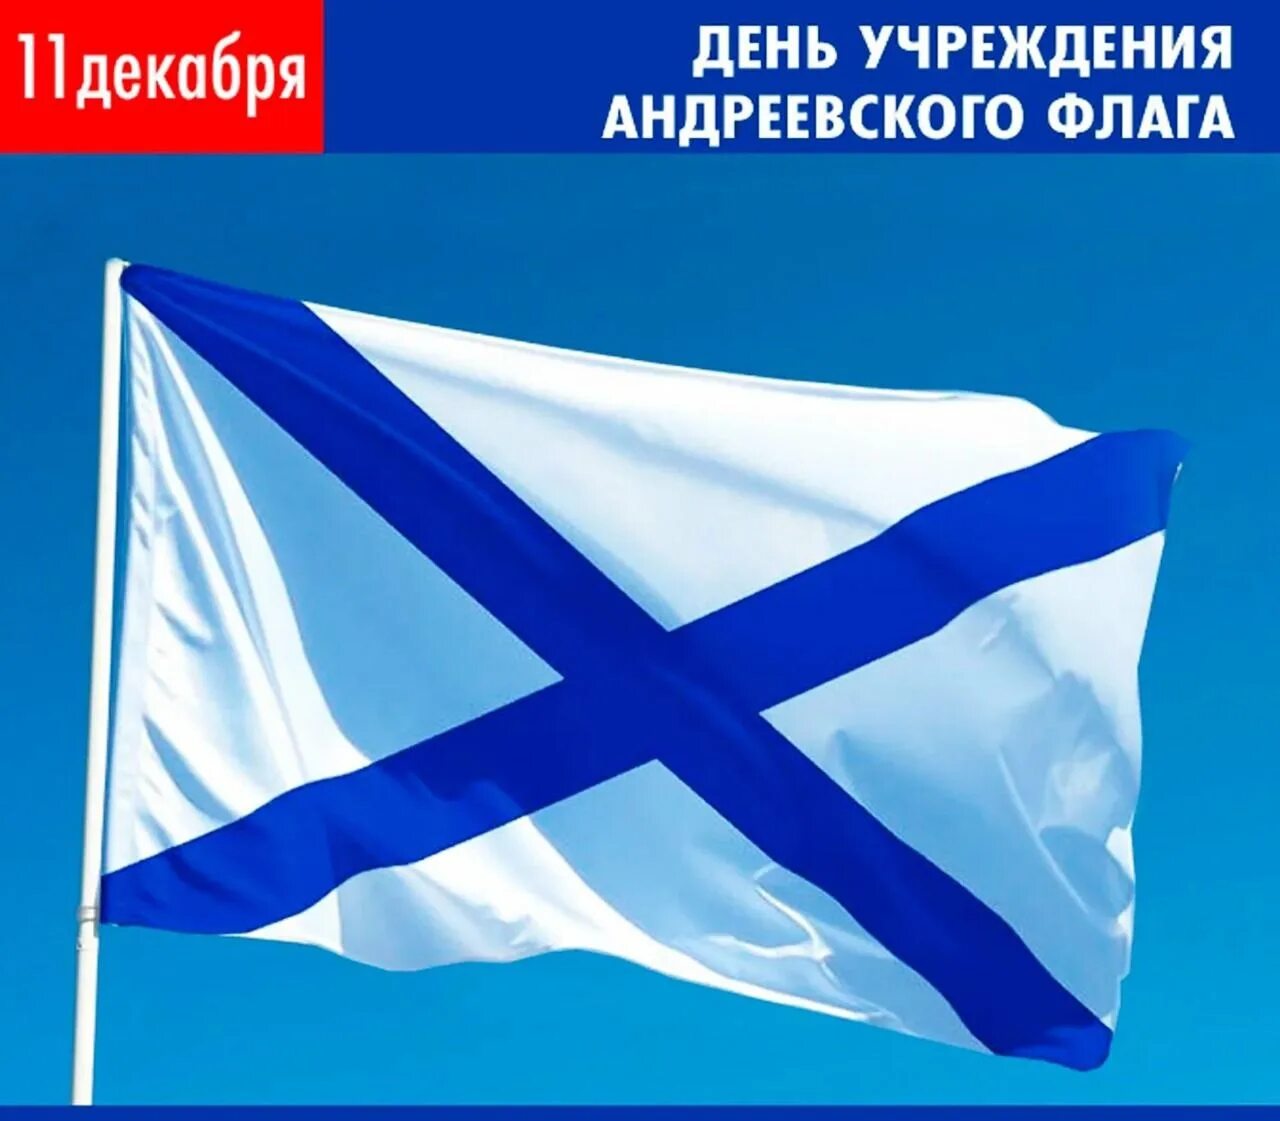 Андреевский флаг на флагах каких стран